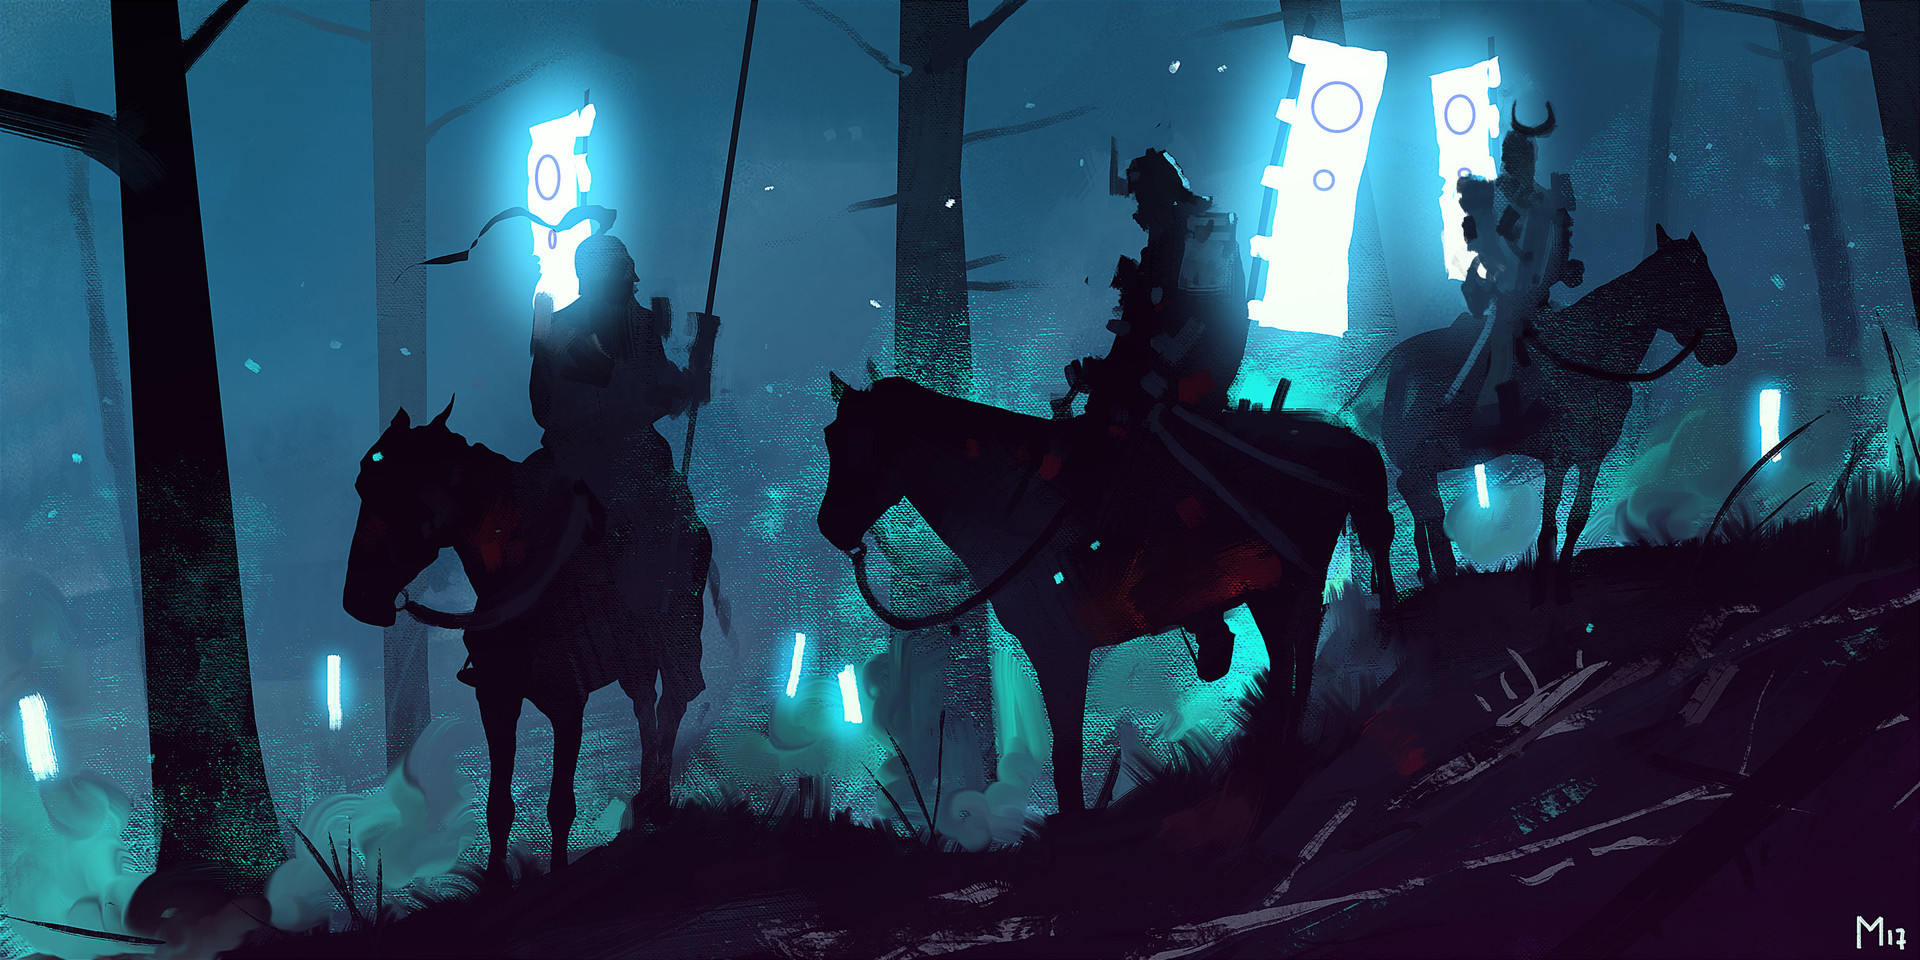 Wallpaper Knight, banners, horse, night, digital art